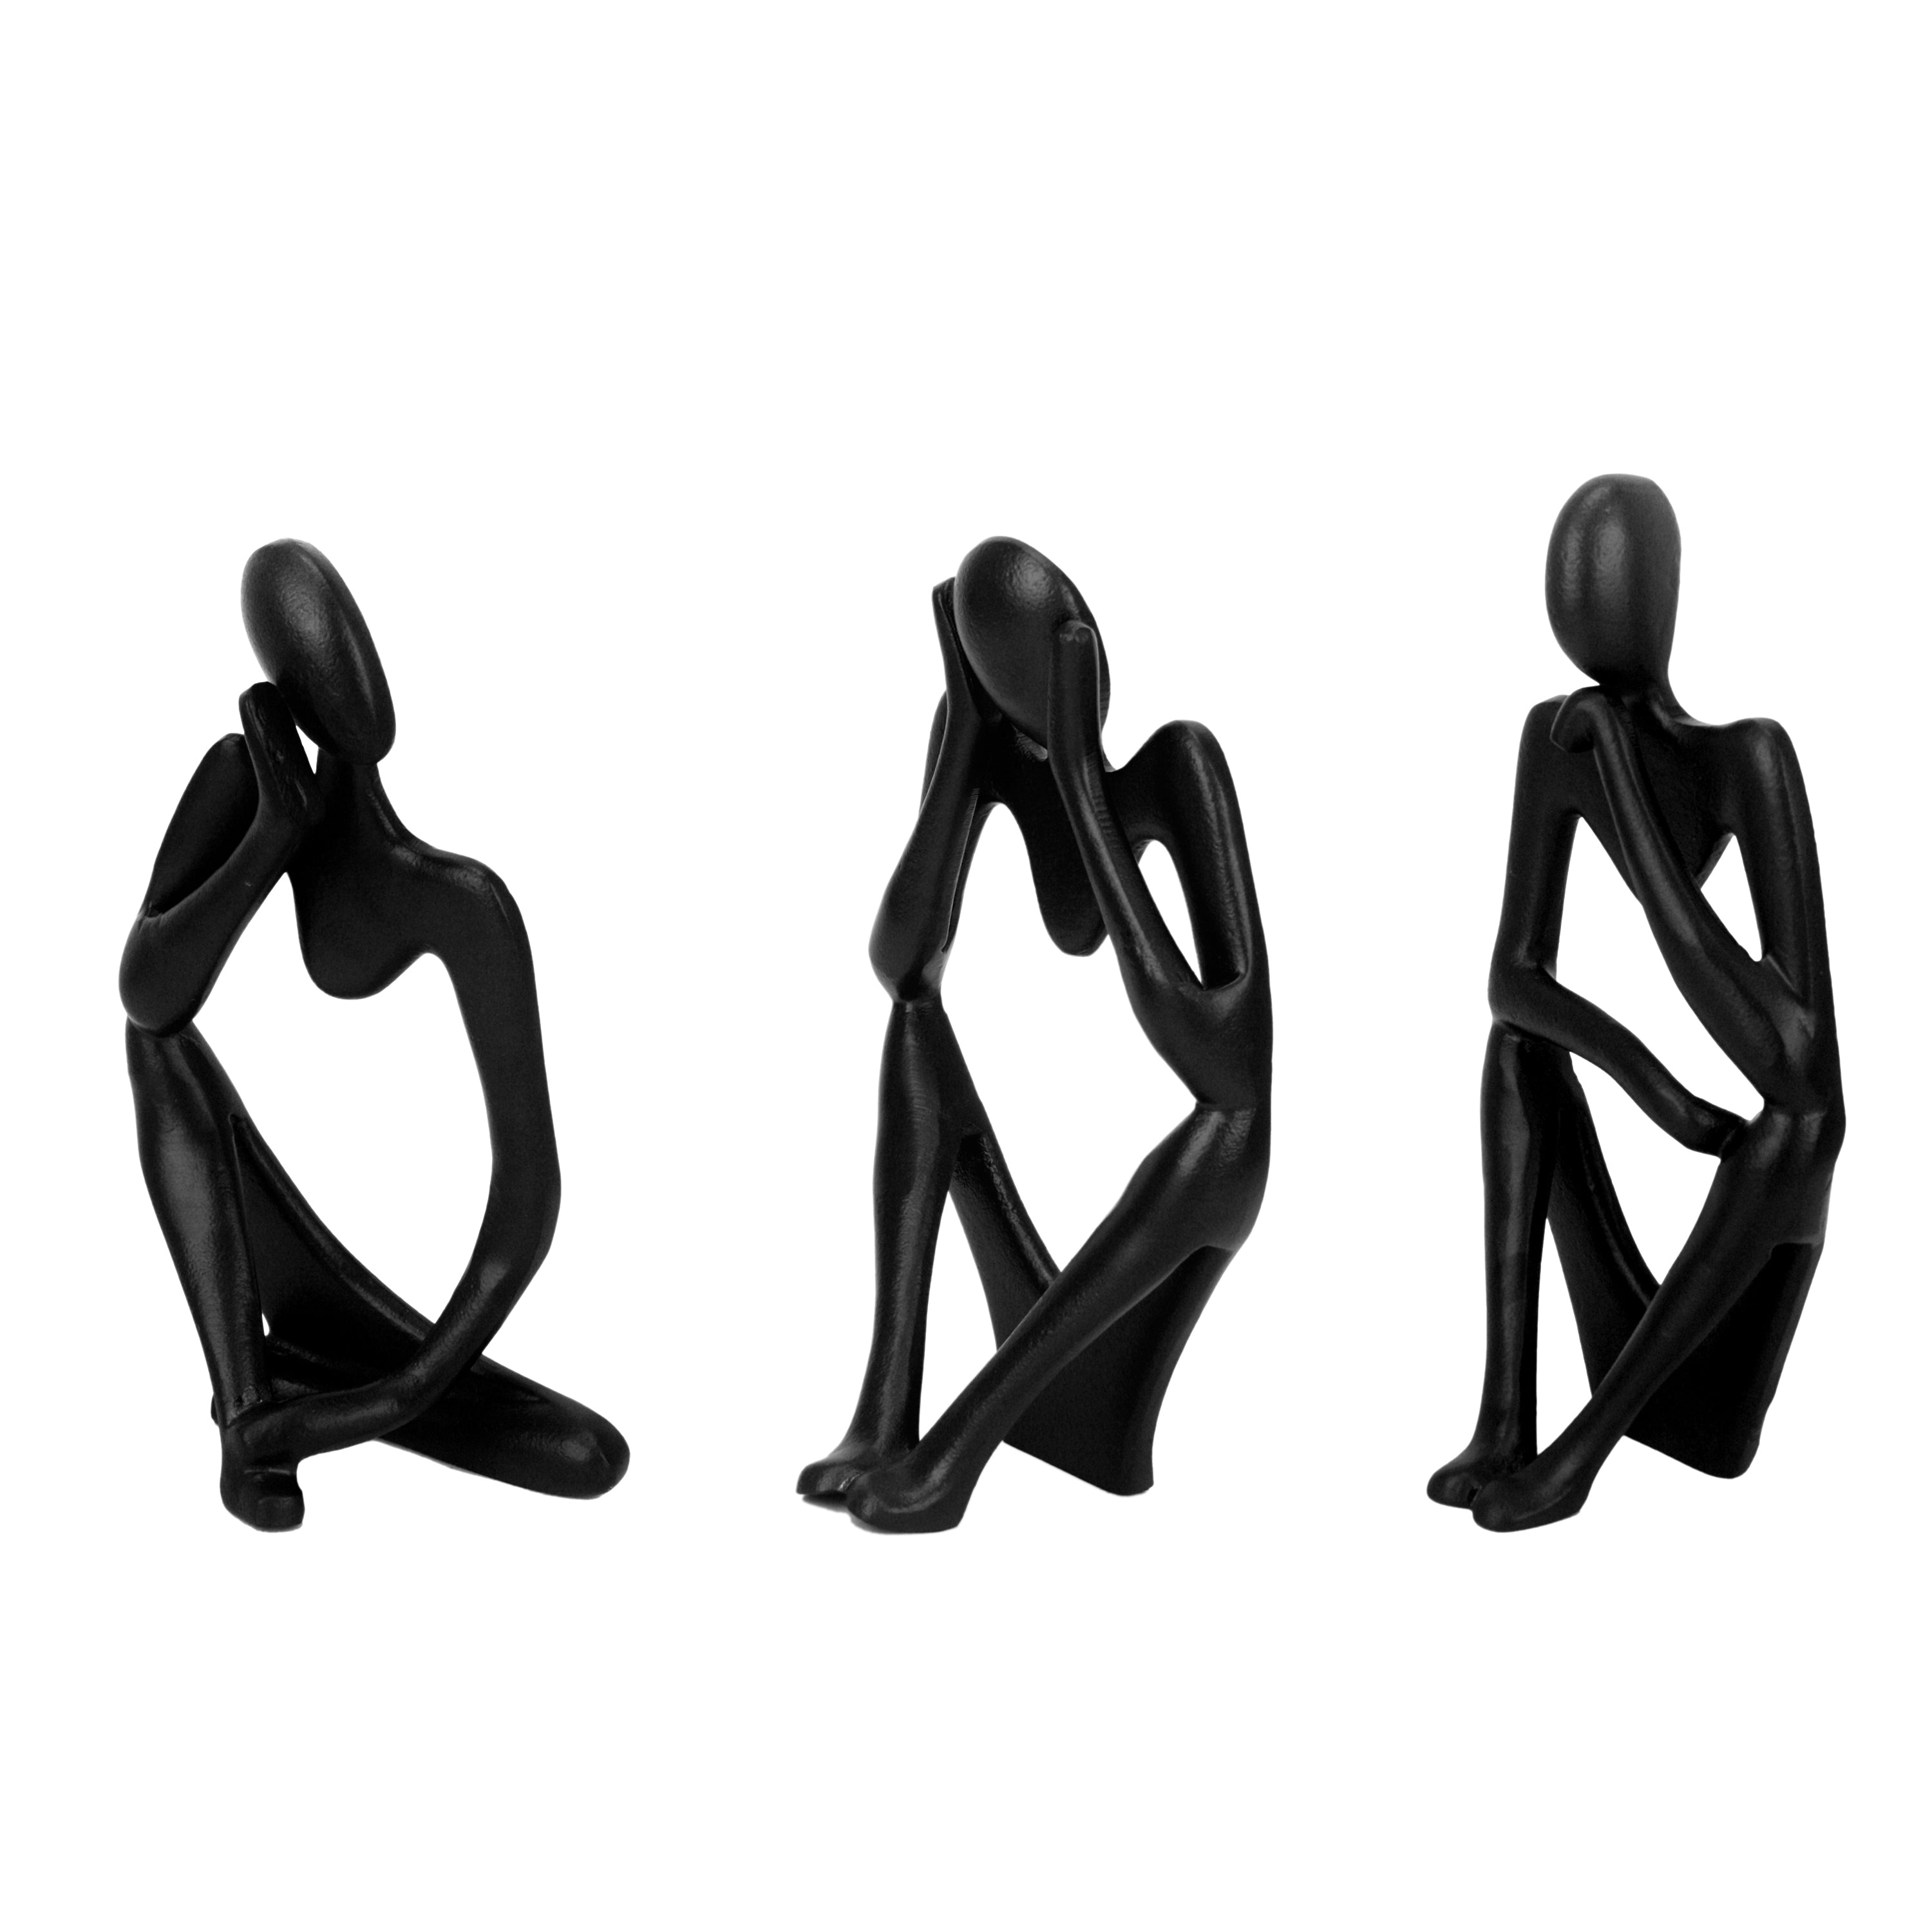 Black Hollow Man Sculpture Set